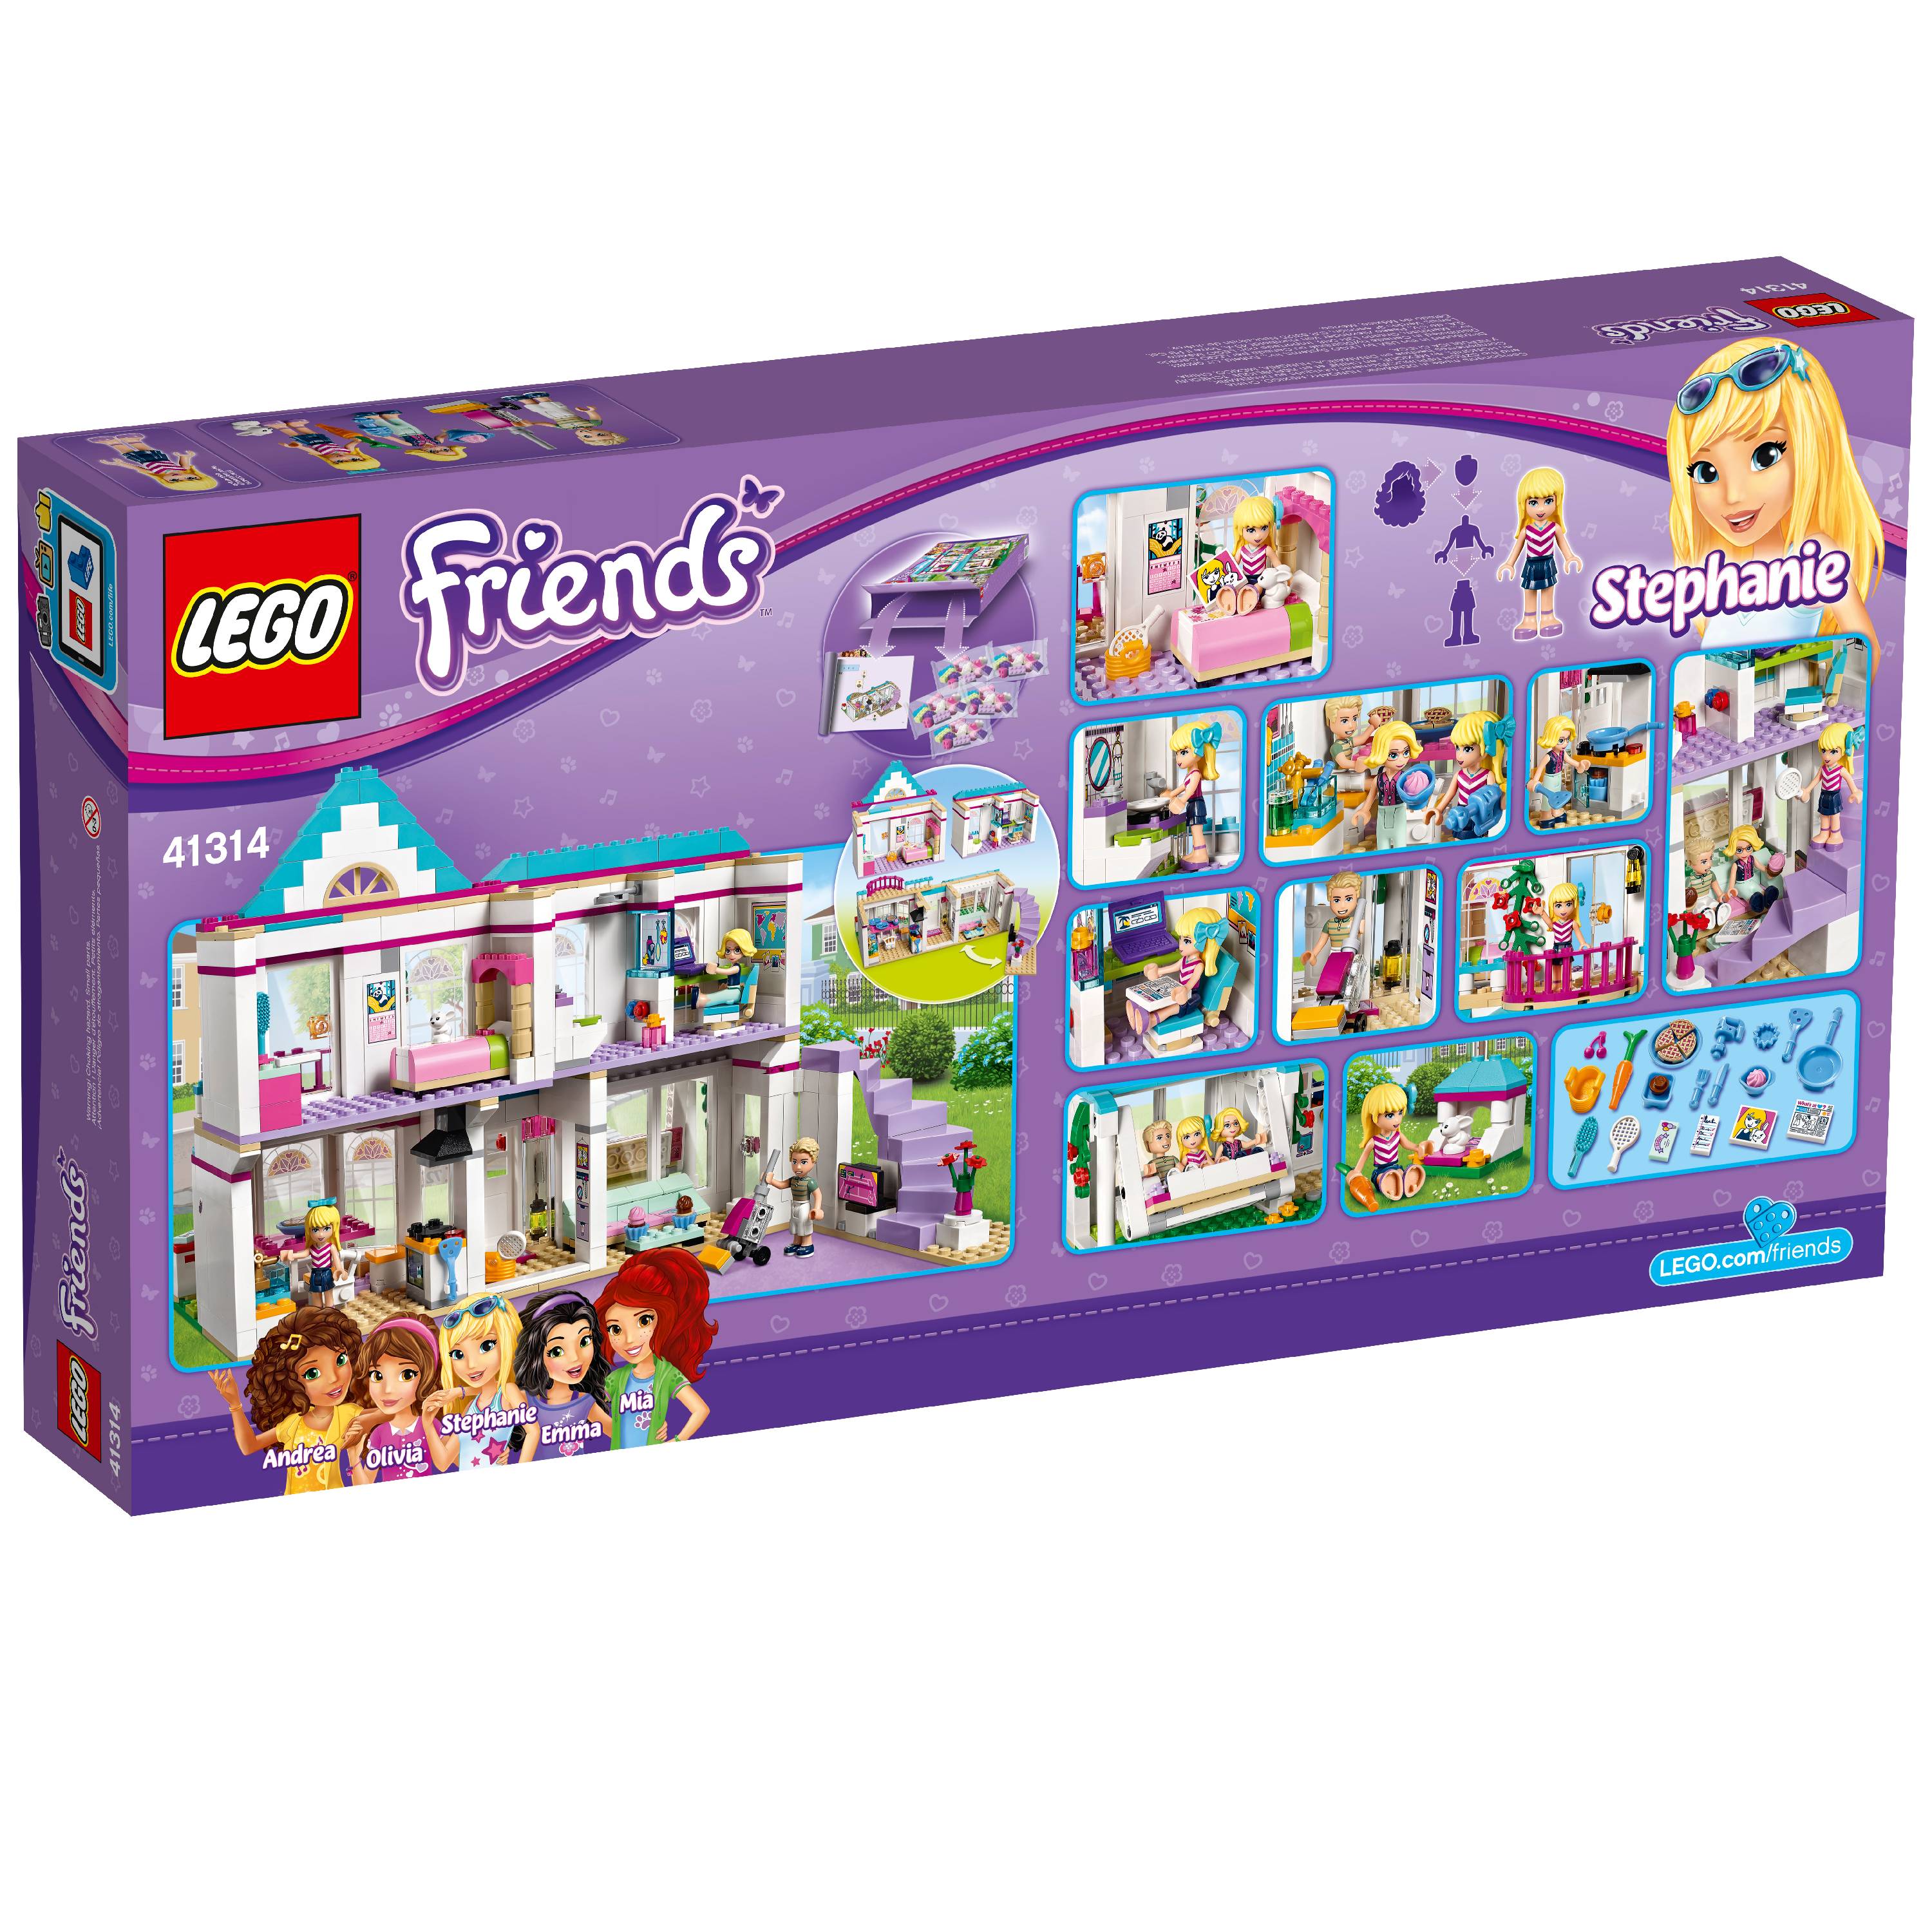 LEGO Friends Stephanie's House 41314 Toy Dollhouse Playset (622 pcs) - image 4 of 6